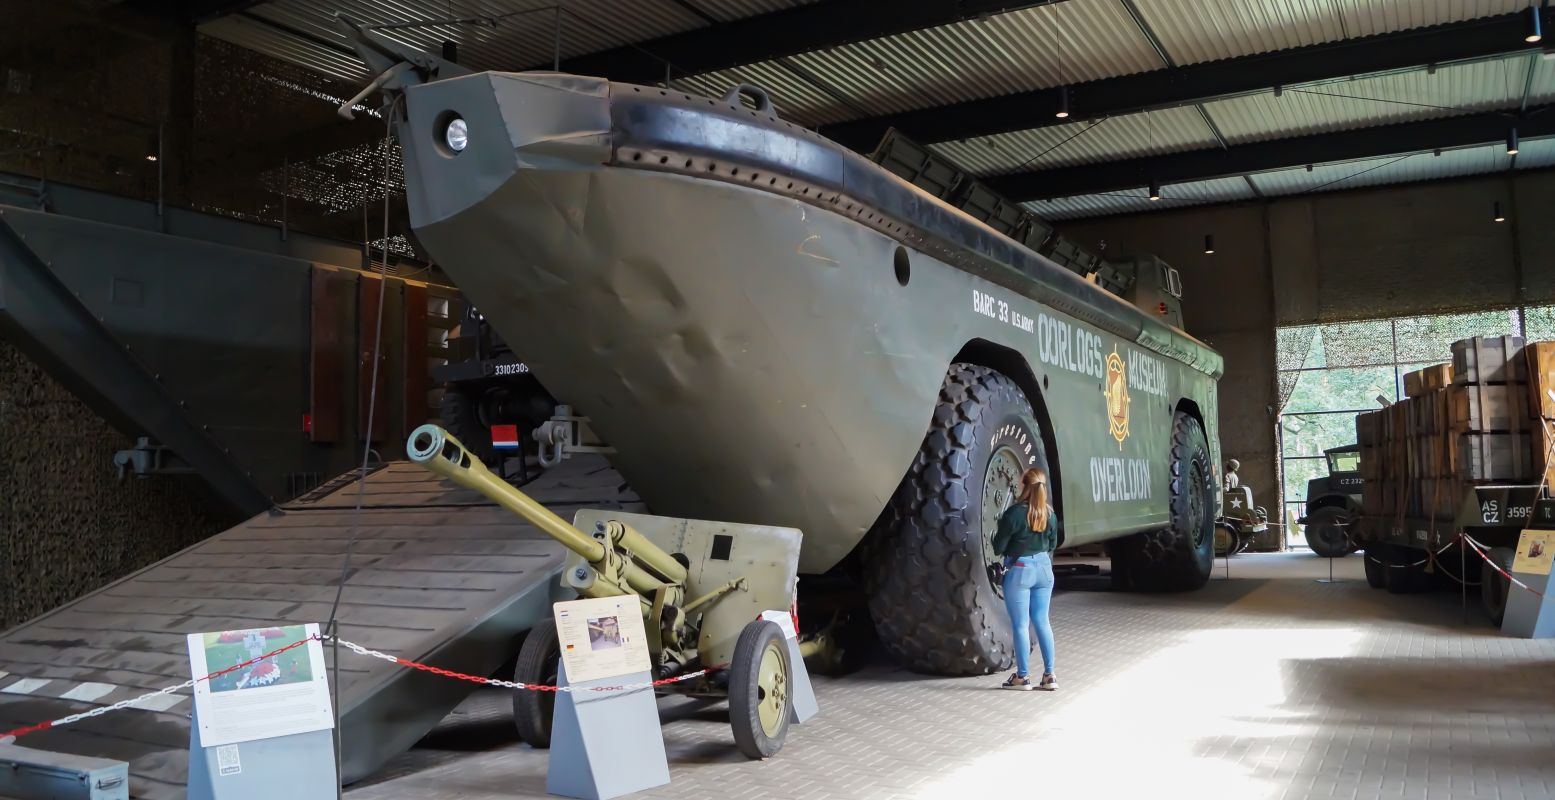 Dit amfibievoertuig, de BARC, is enorm. Foto: DagjeWeg.NL